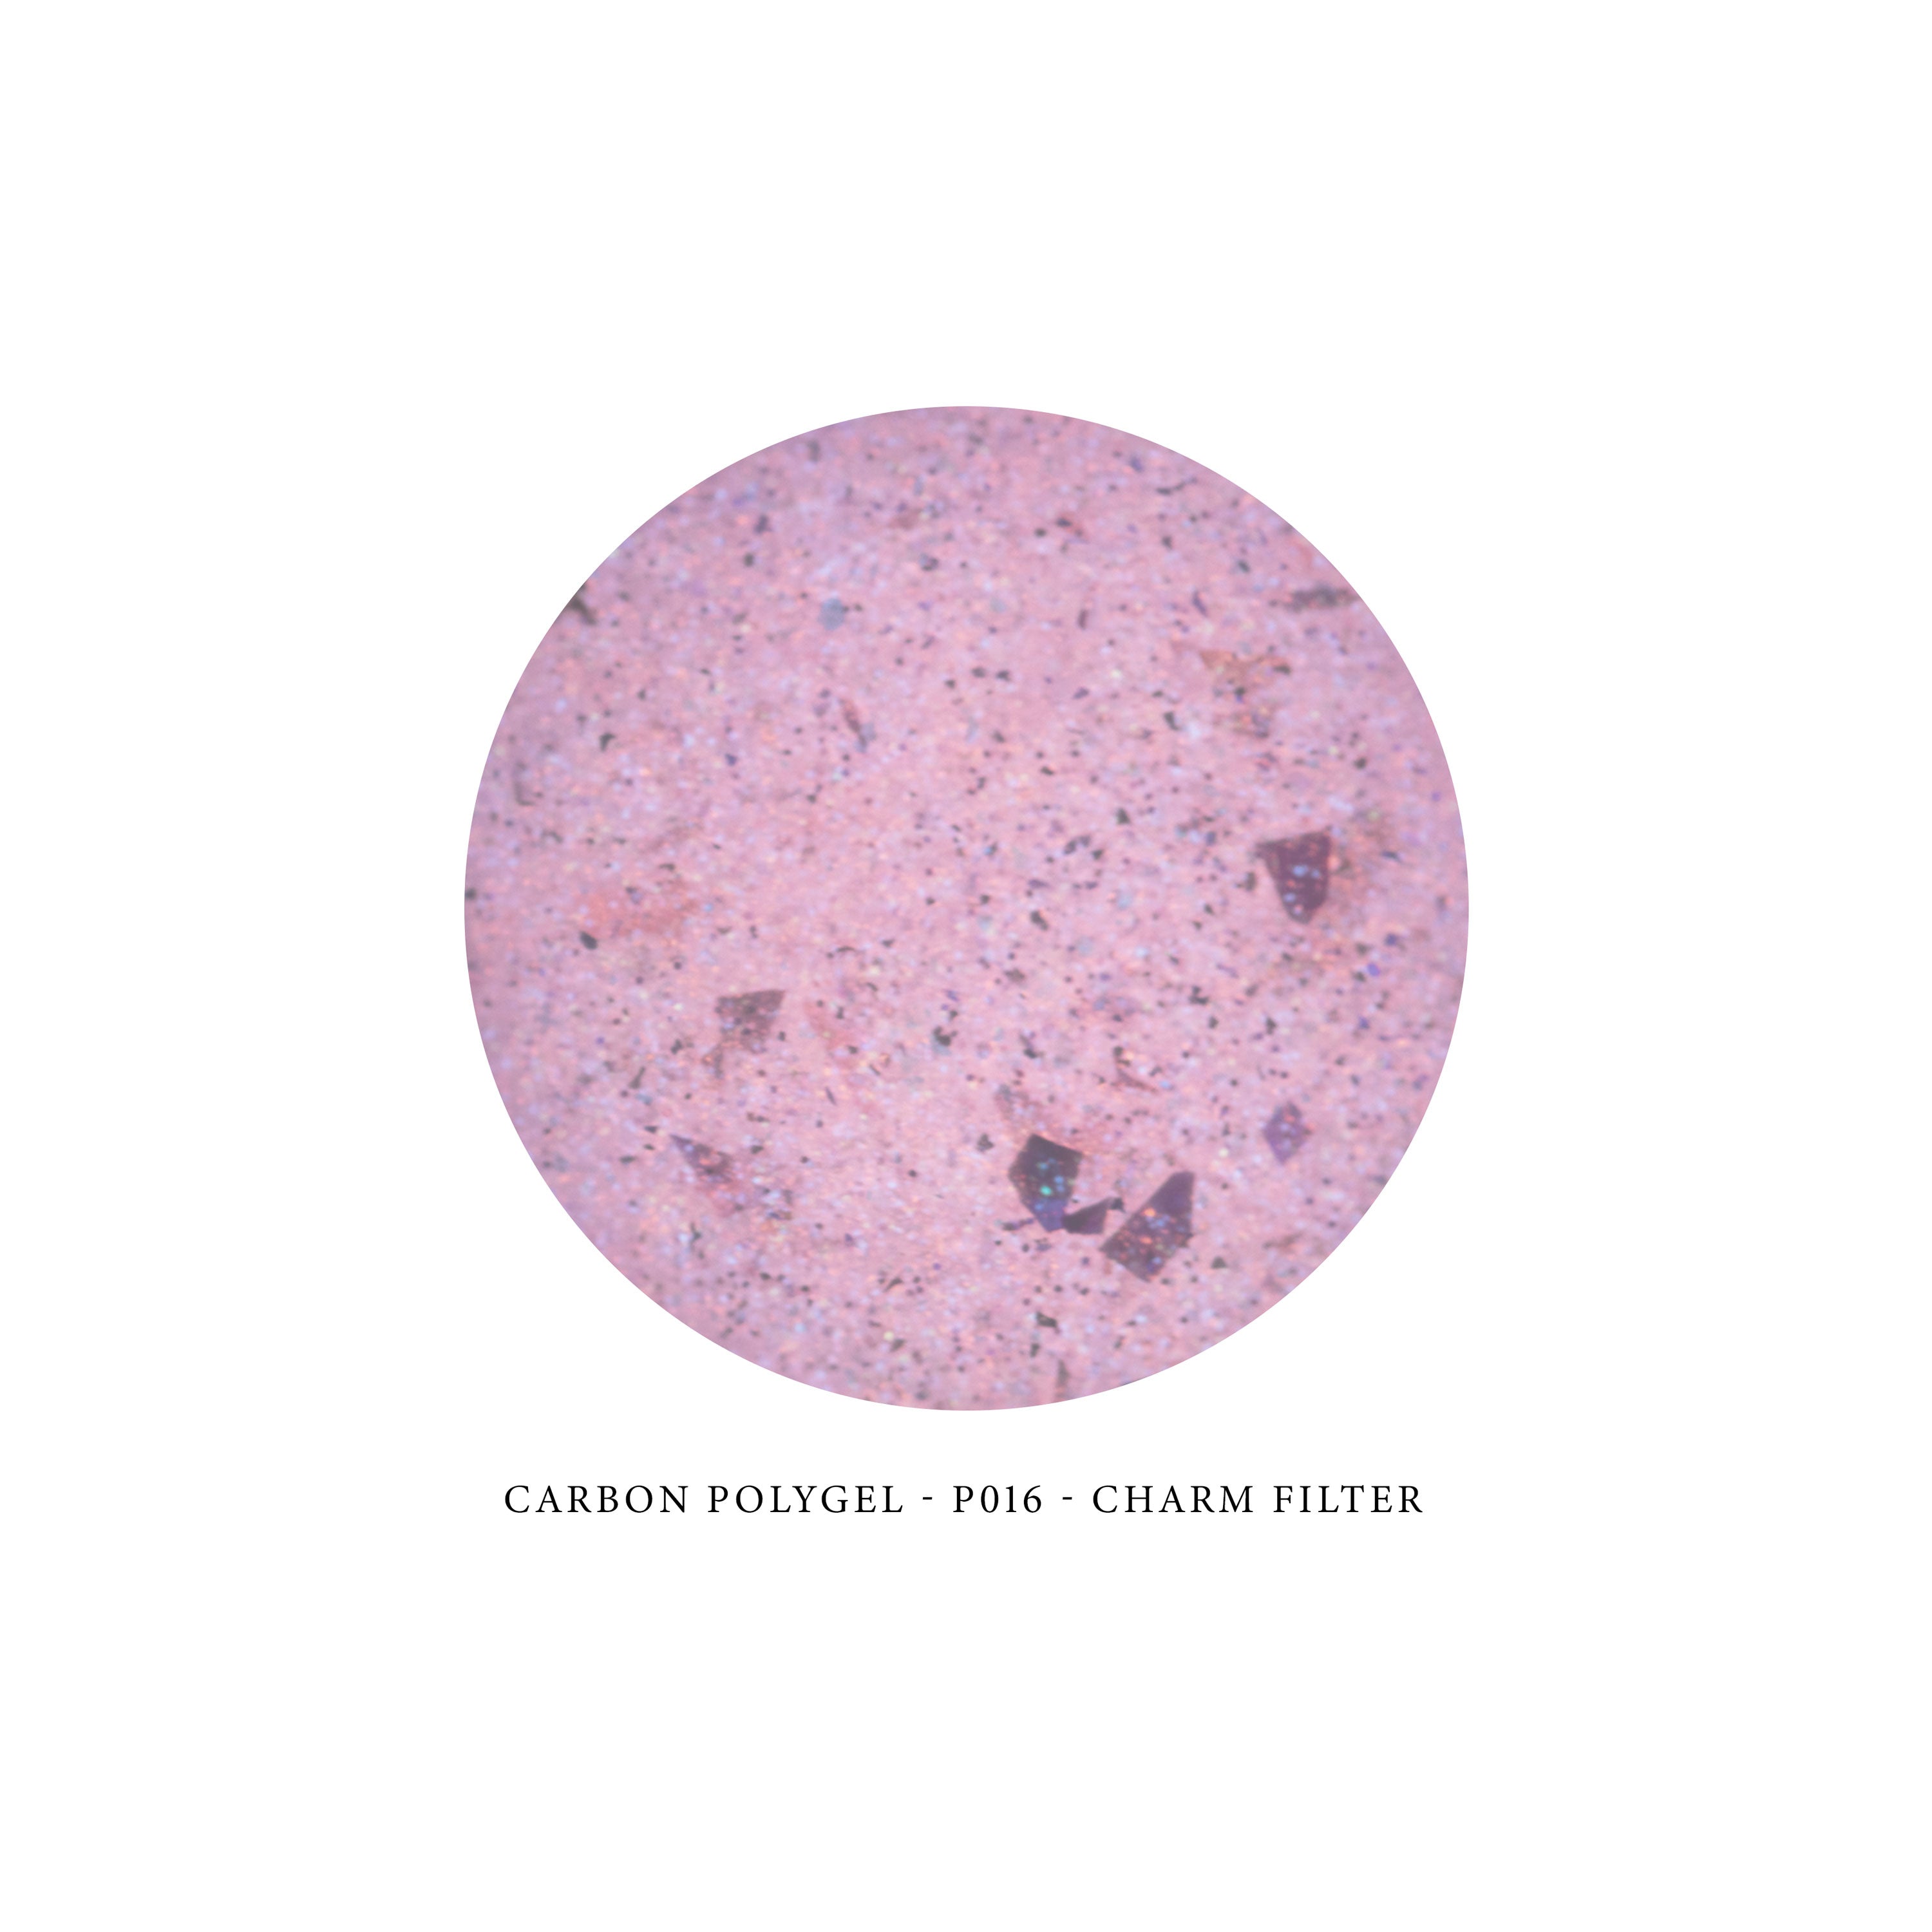 Carbon Polygel P016 - CHARM FILTER 30g